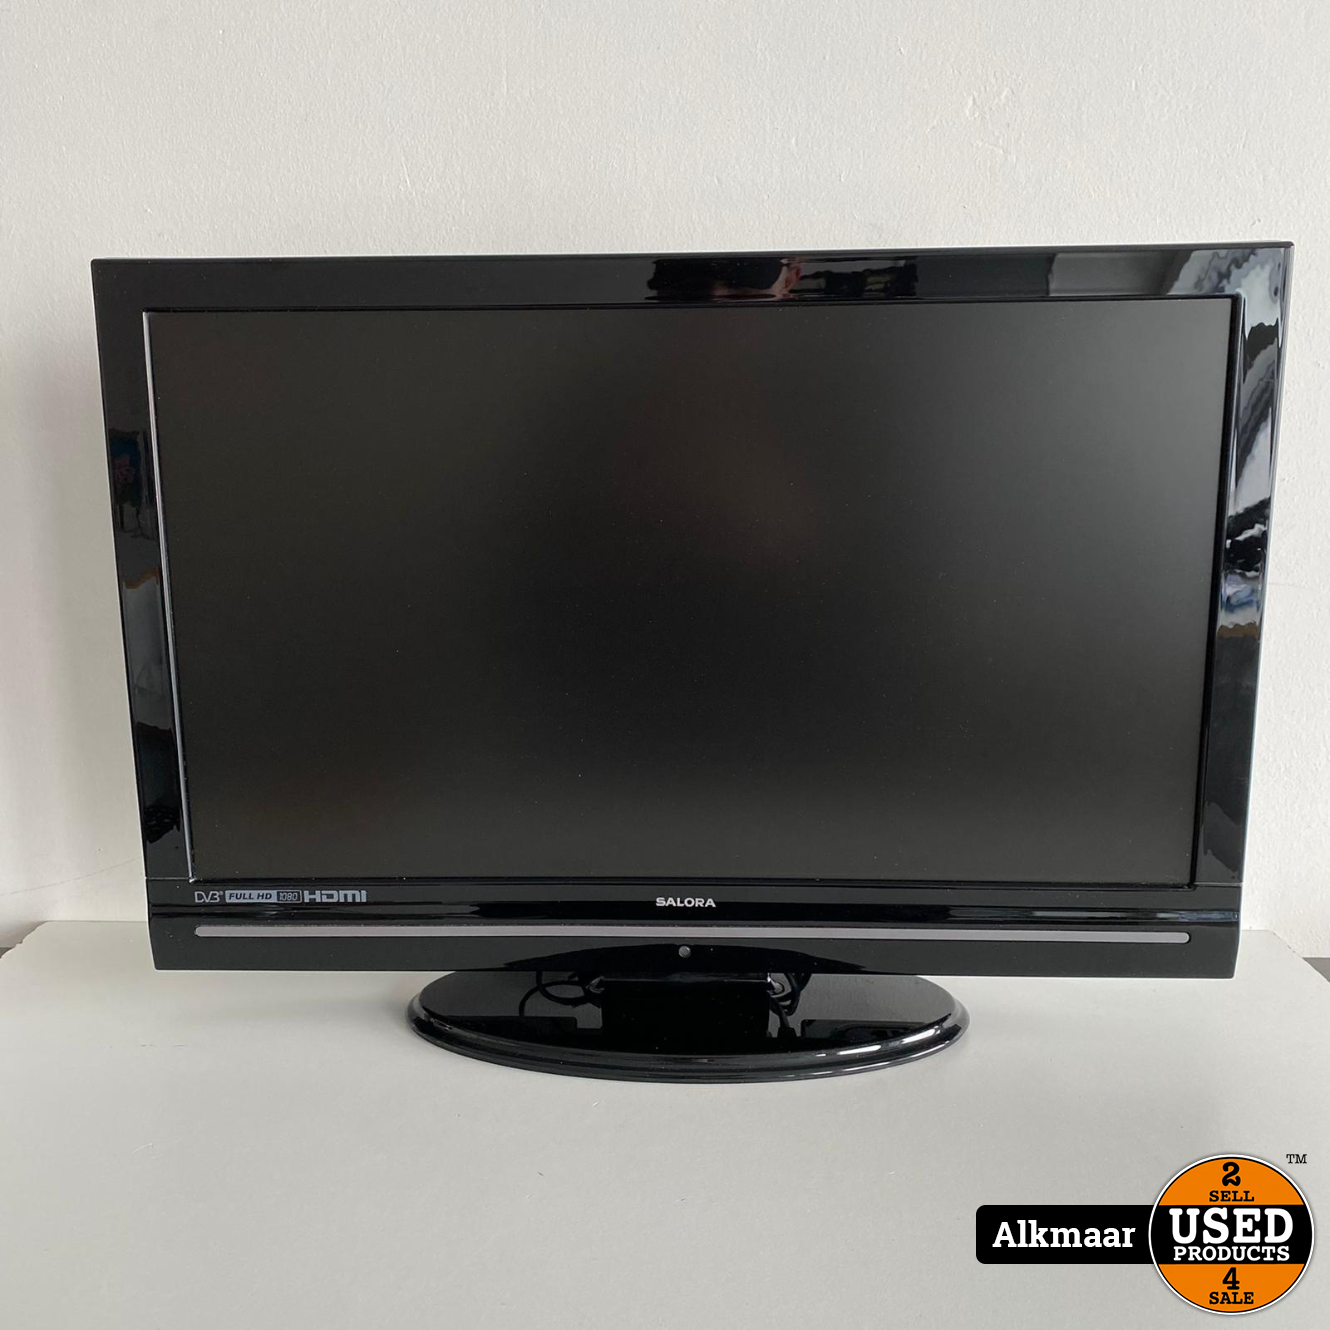 Straat Medicinaal Versterken Salora LED2431FHCI 24 inch Full-HD TV zonder ab - Used Products Alkmaar